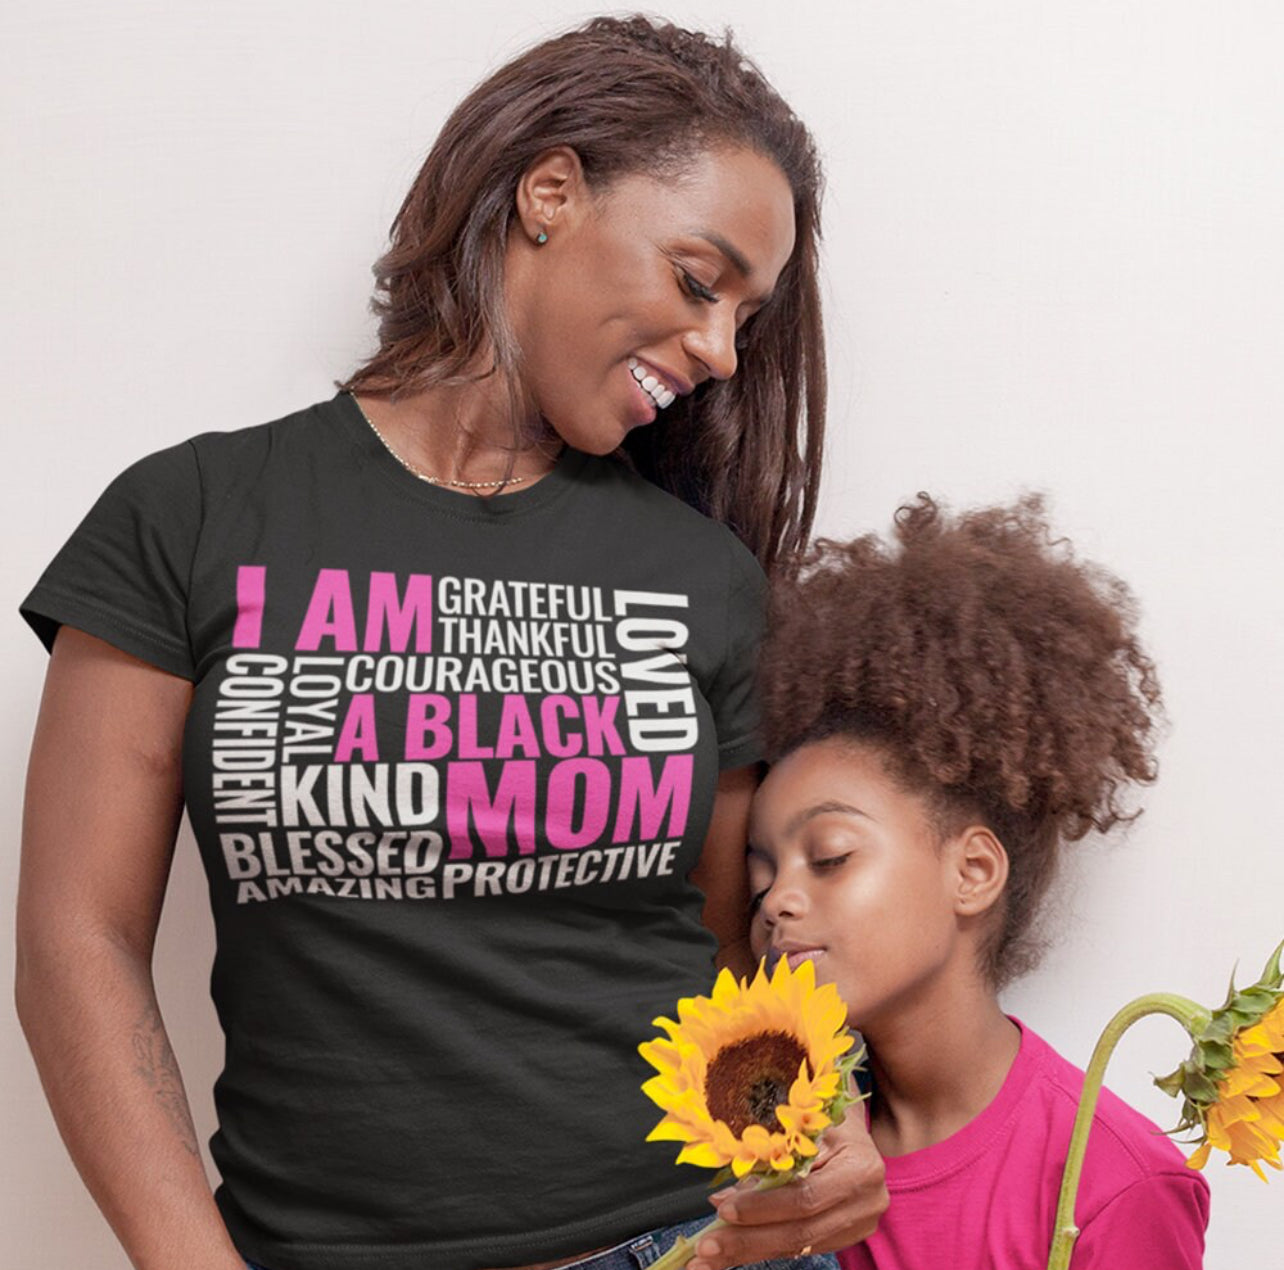 I am a Black Mom